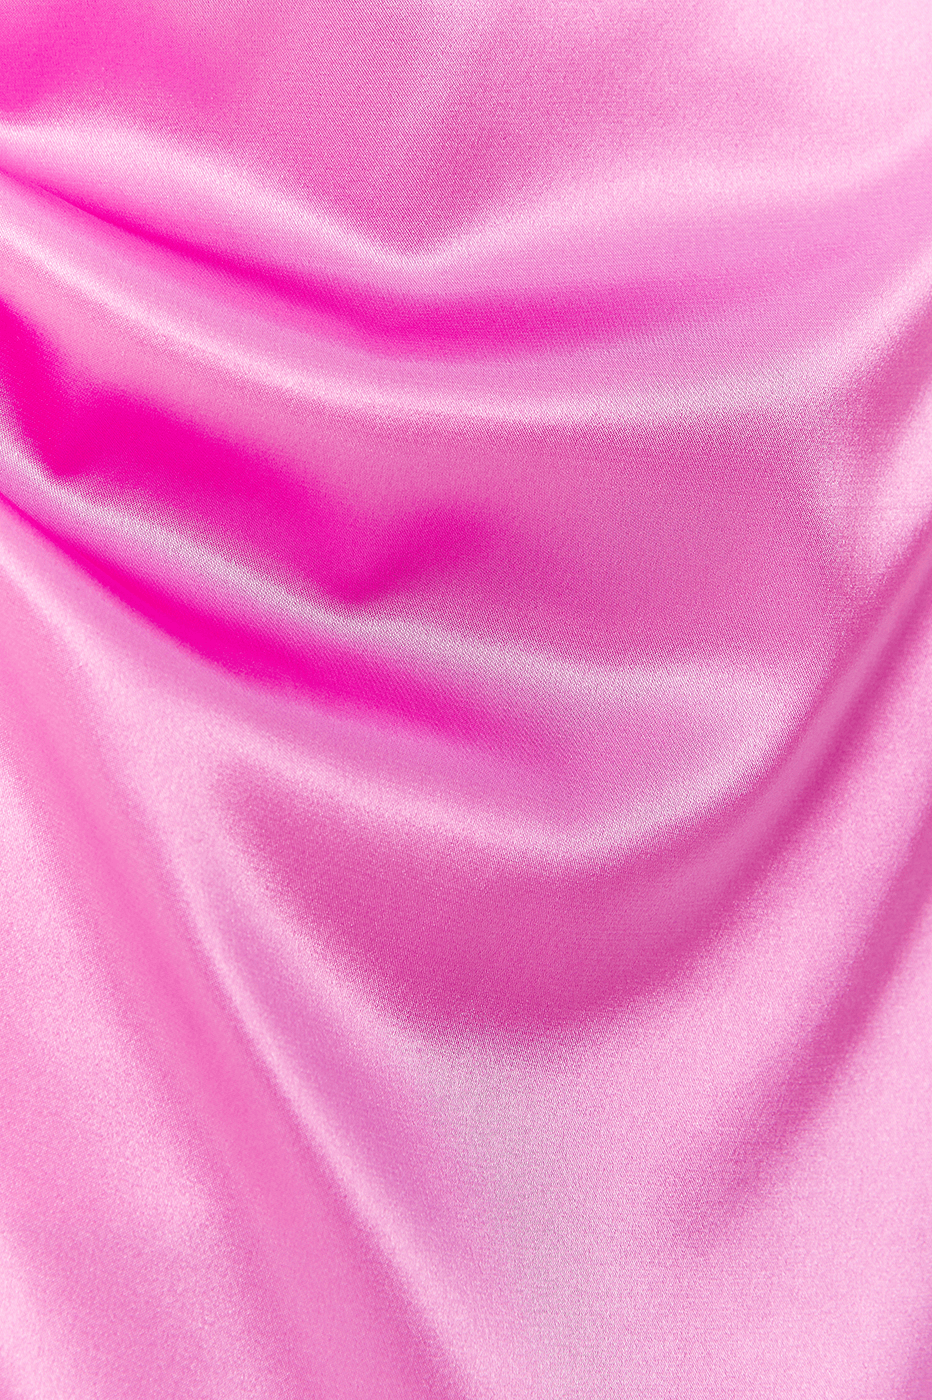 dark pink silk background  Sfondi verdi, Sfondi rosa